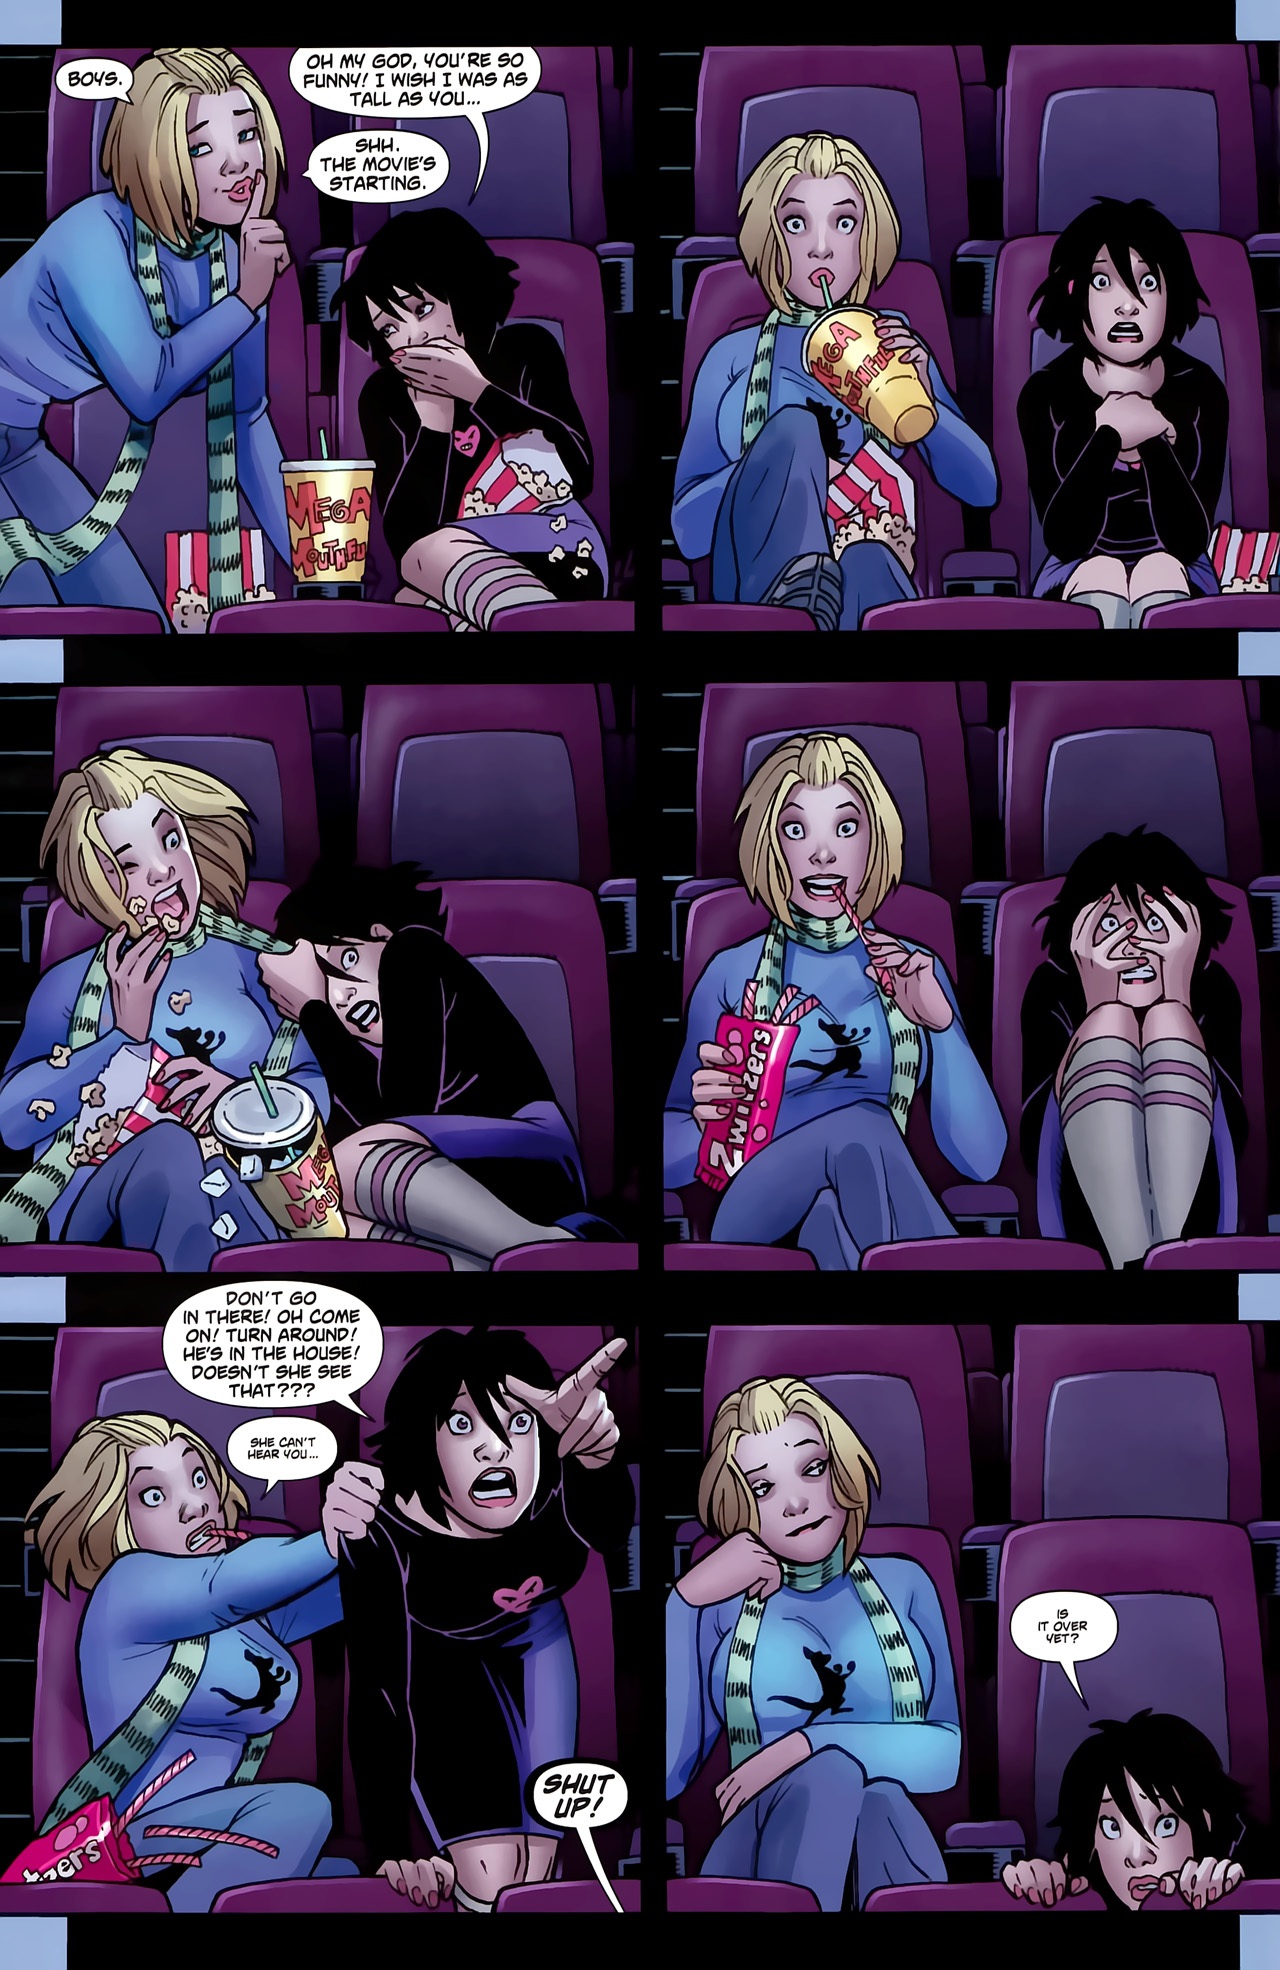 Power Girl and Terra enjoy a movie